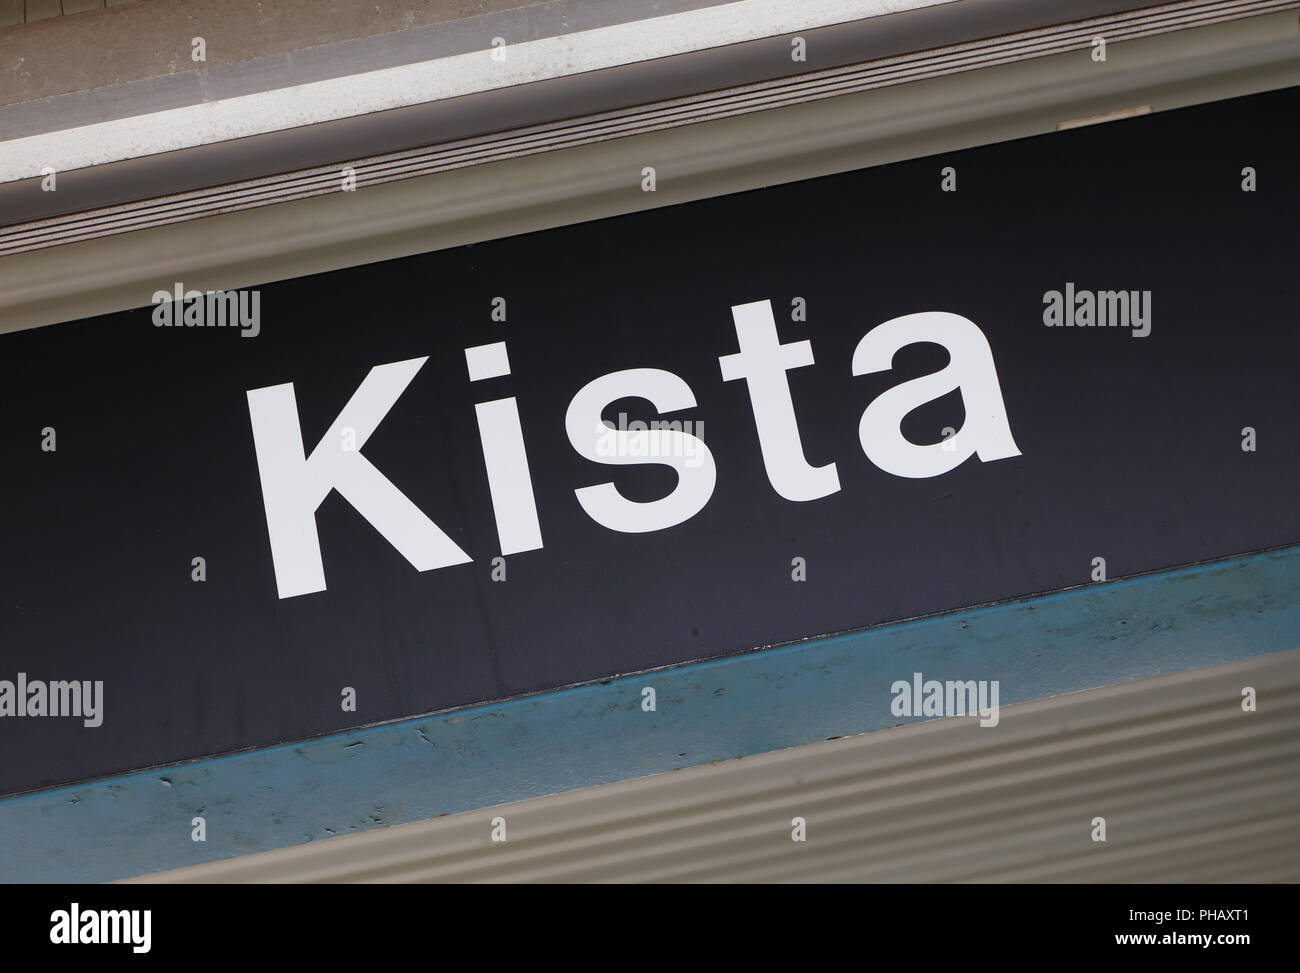 Nahaufnahme der Stockholmer U-Bahn station name sign Kista in der Vorstadt Bezirk den Namen teilen. Stockfoto